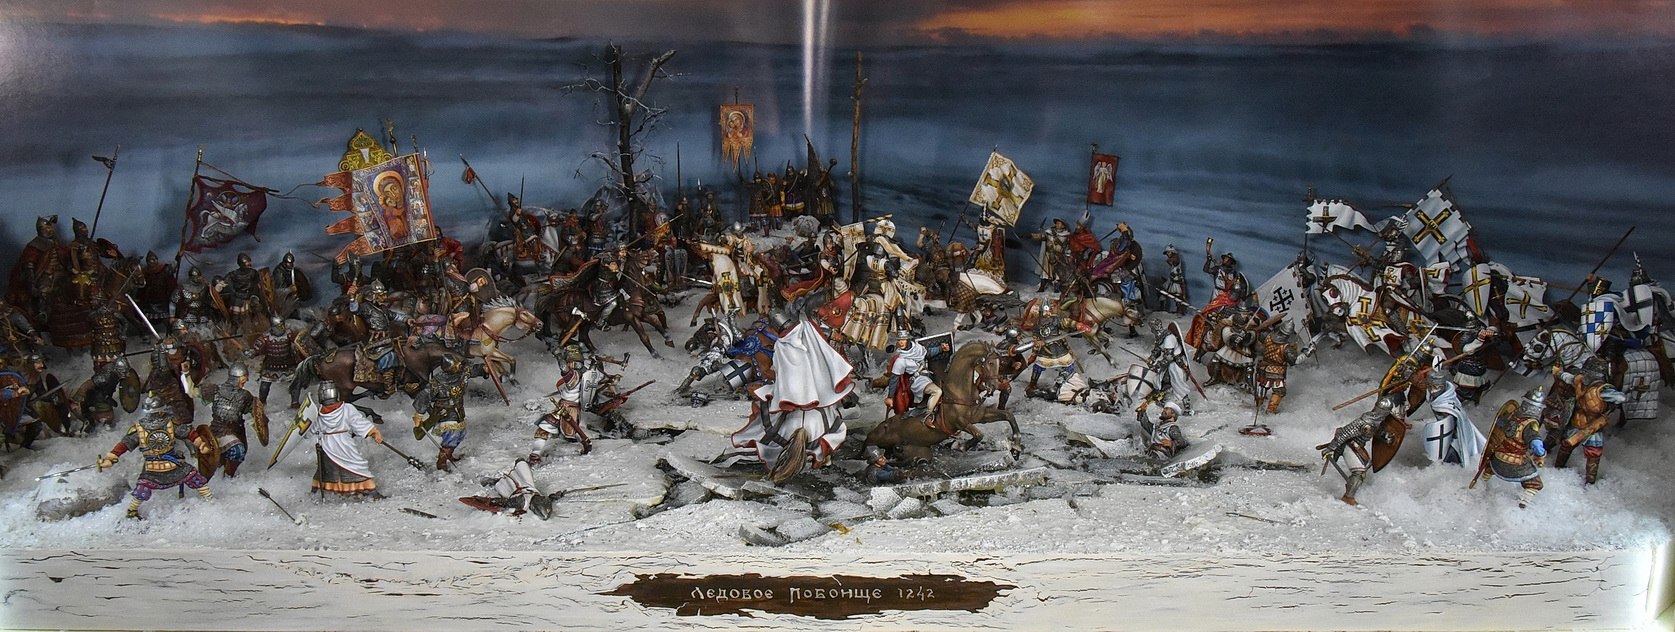 Ледовая битва 1242